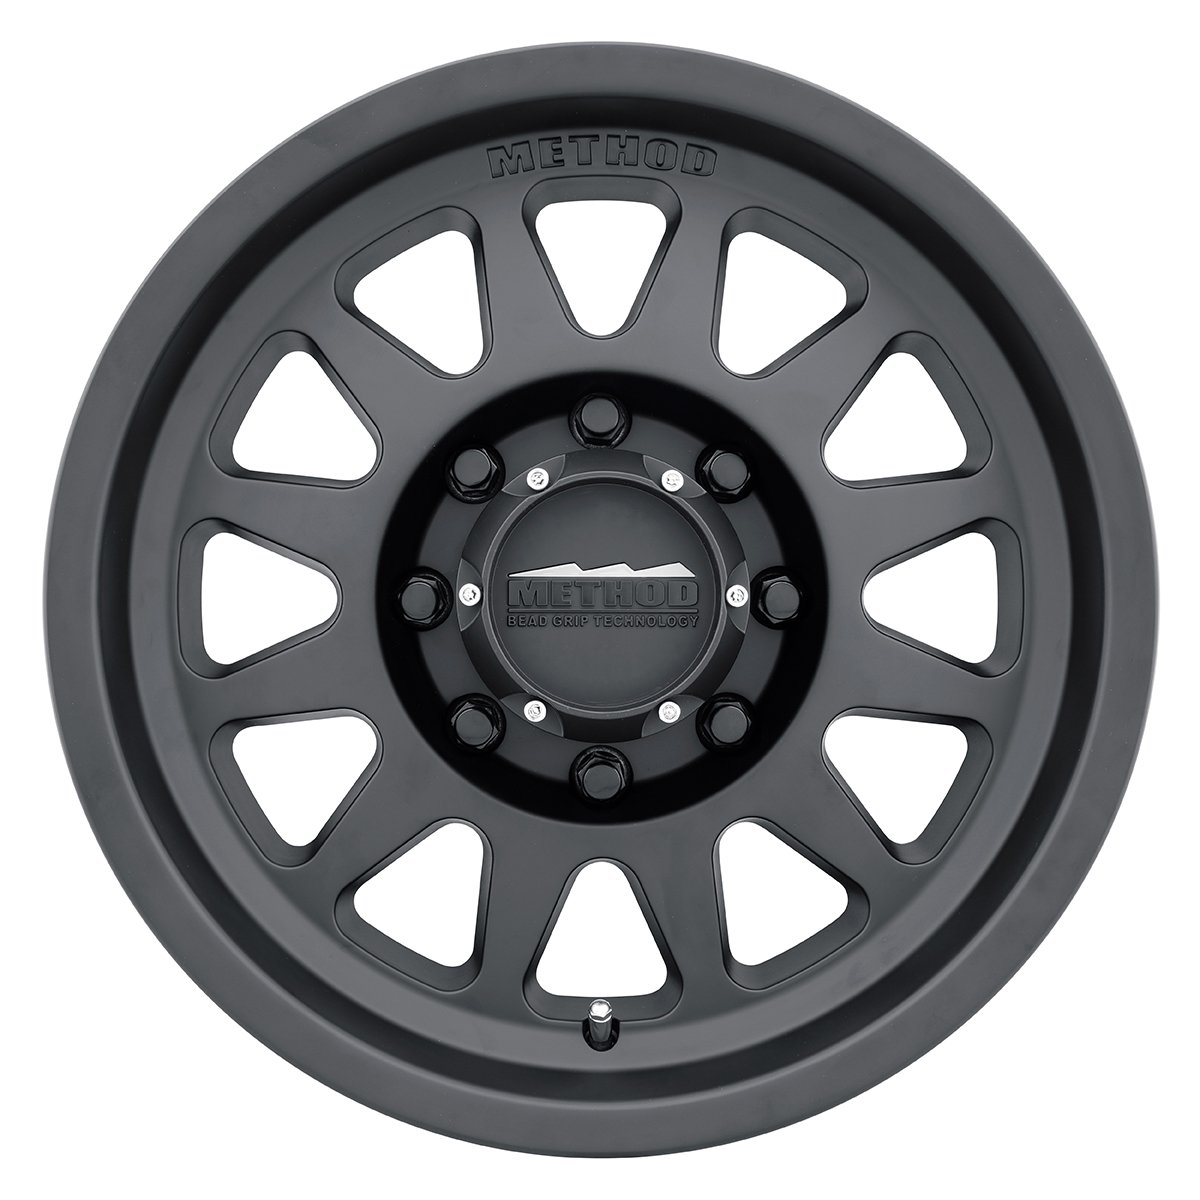 704 HD Trail Series Matte Black Finish Wheels Method (front view)